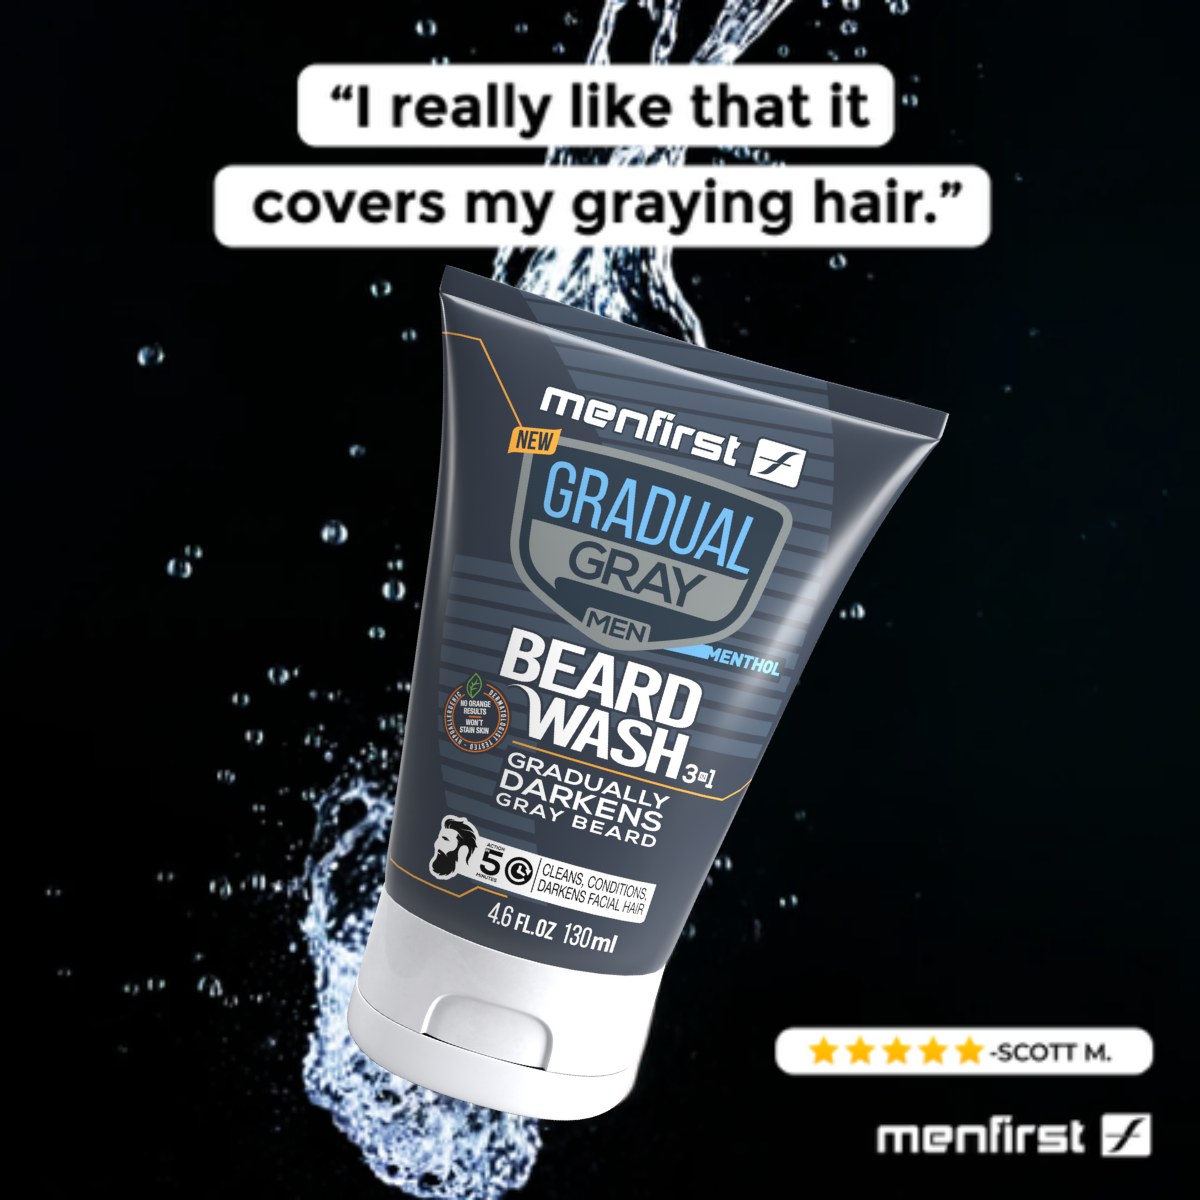 Menfirst Gradual Gray - Beard Wash - Natural Darkening Formula - 3 Pack - 4.6 Oz Each